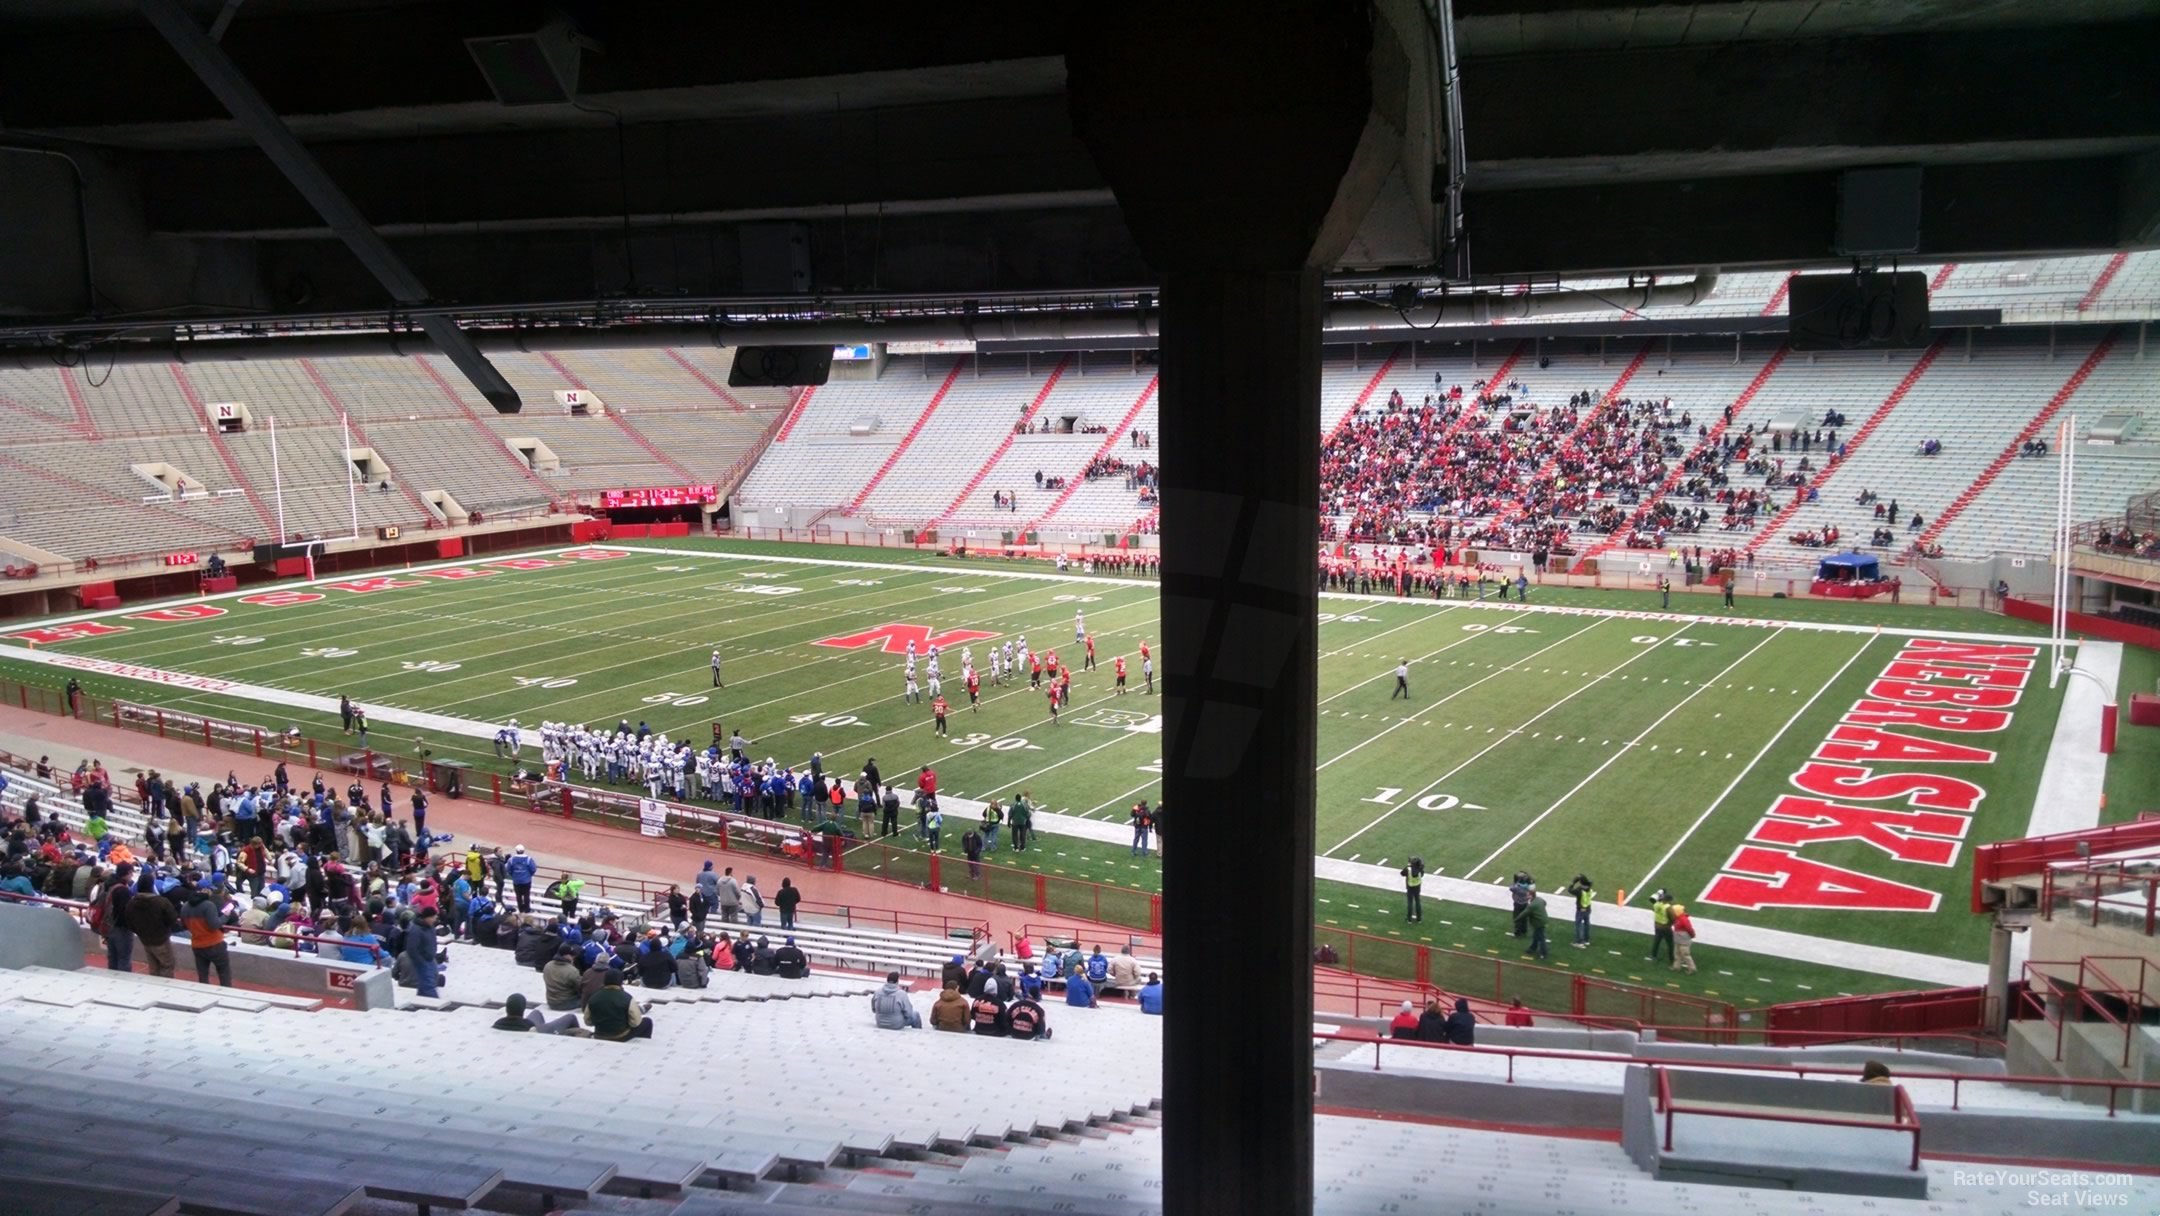 section 21, row 44 seat view  - memorial stadium (nebraska)